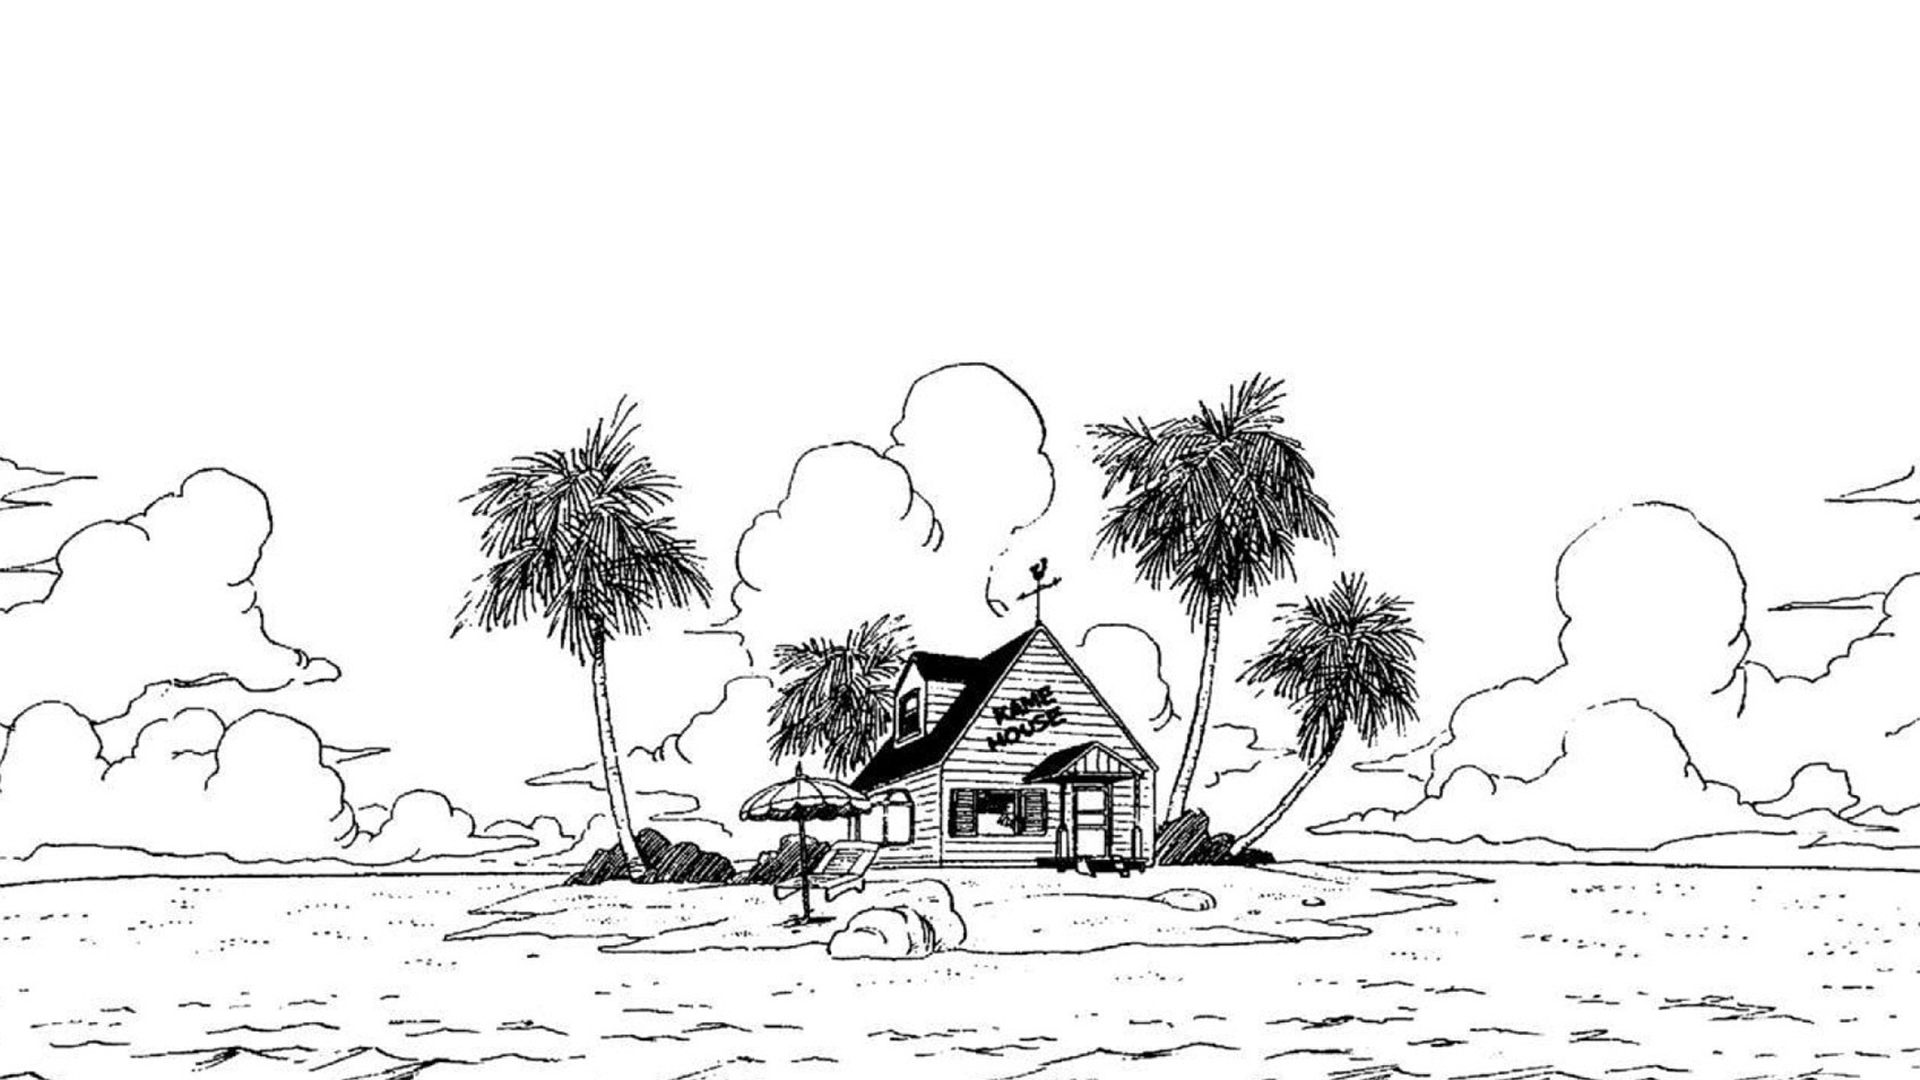 Anime 1920x1080 Dragon Ball Dragon Ball Z Kame House beach palm trees sunbed parasol clouds